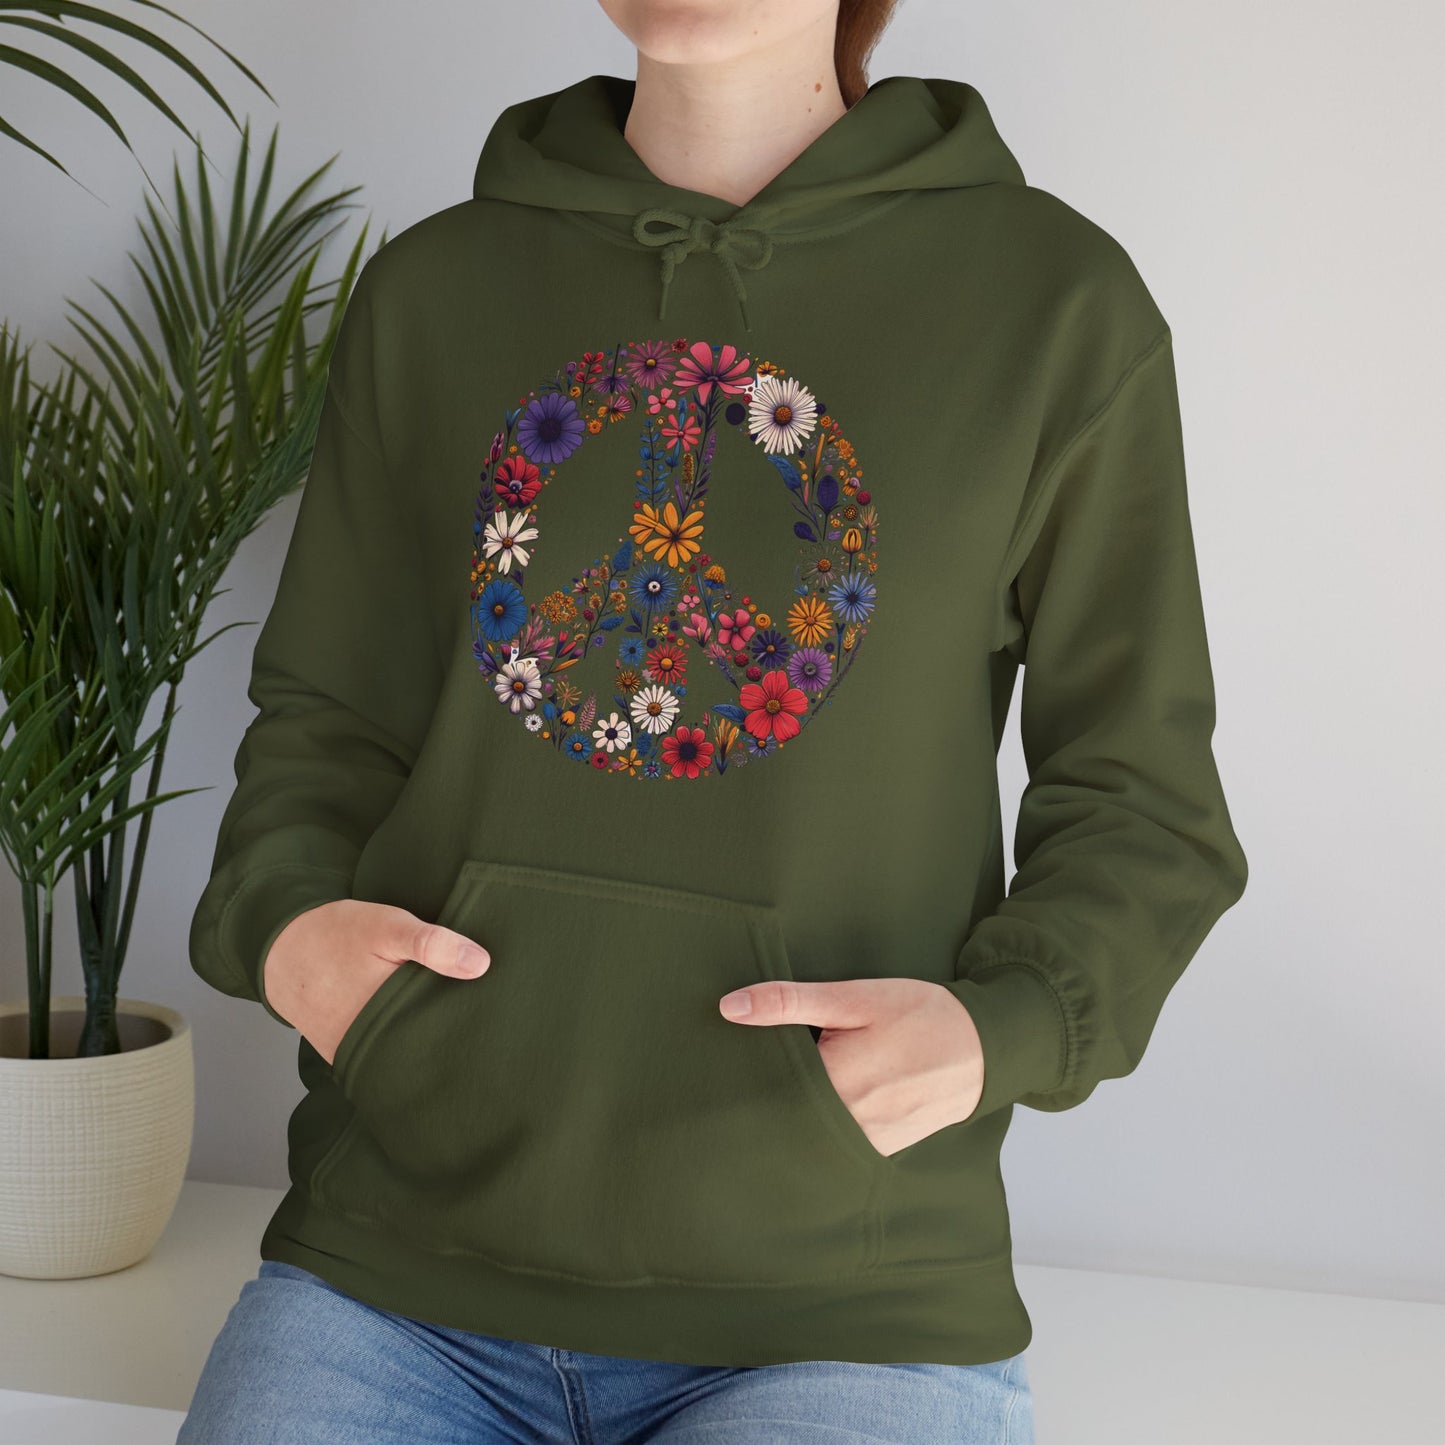 Wildflower Peace Sign Hoodie, Flower Boho Hooded Sweatshirt, Hippie Earth Day Shirt